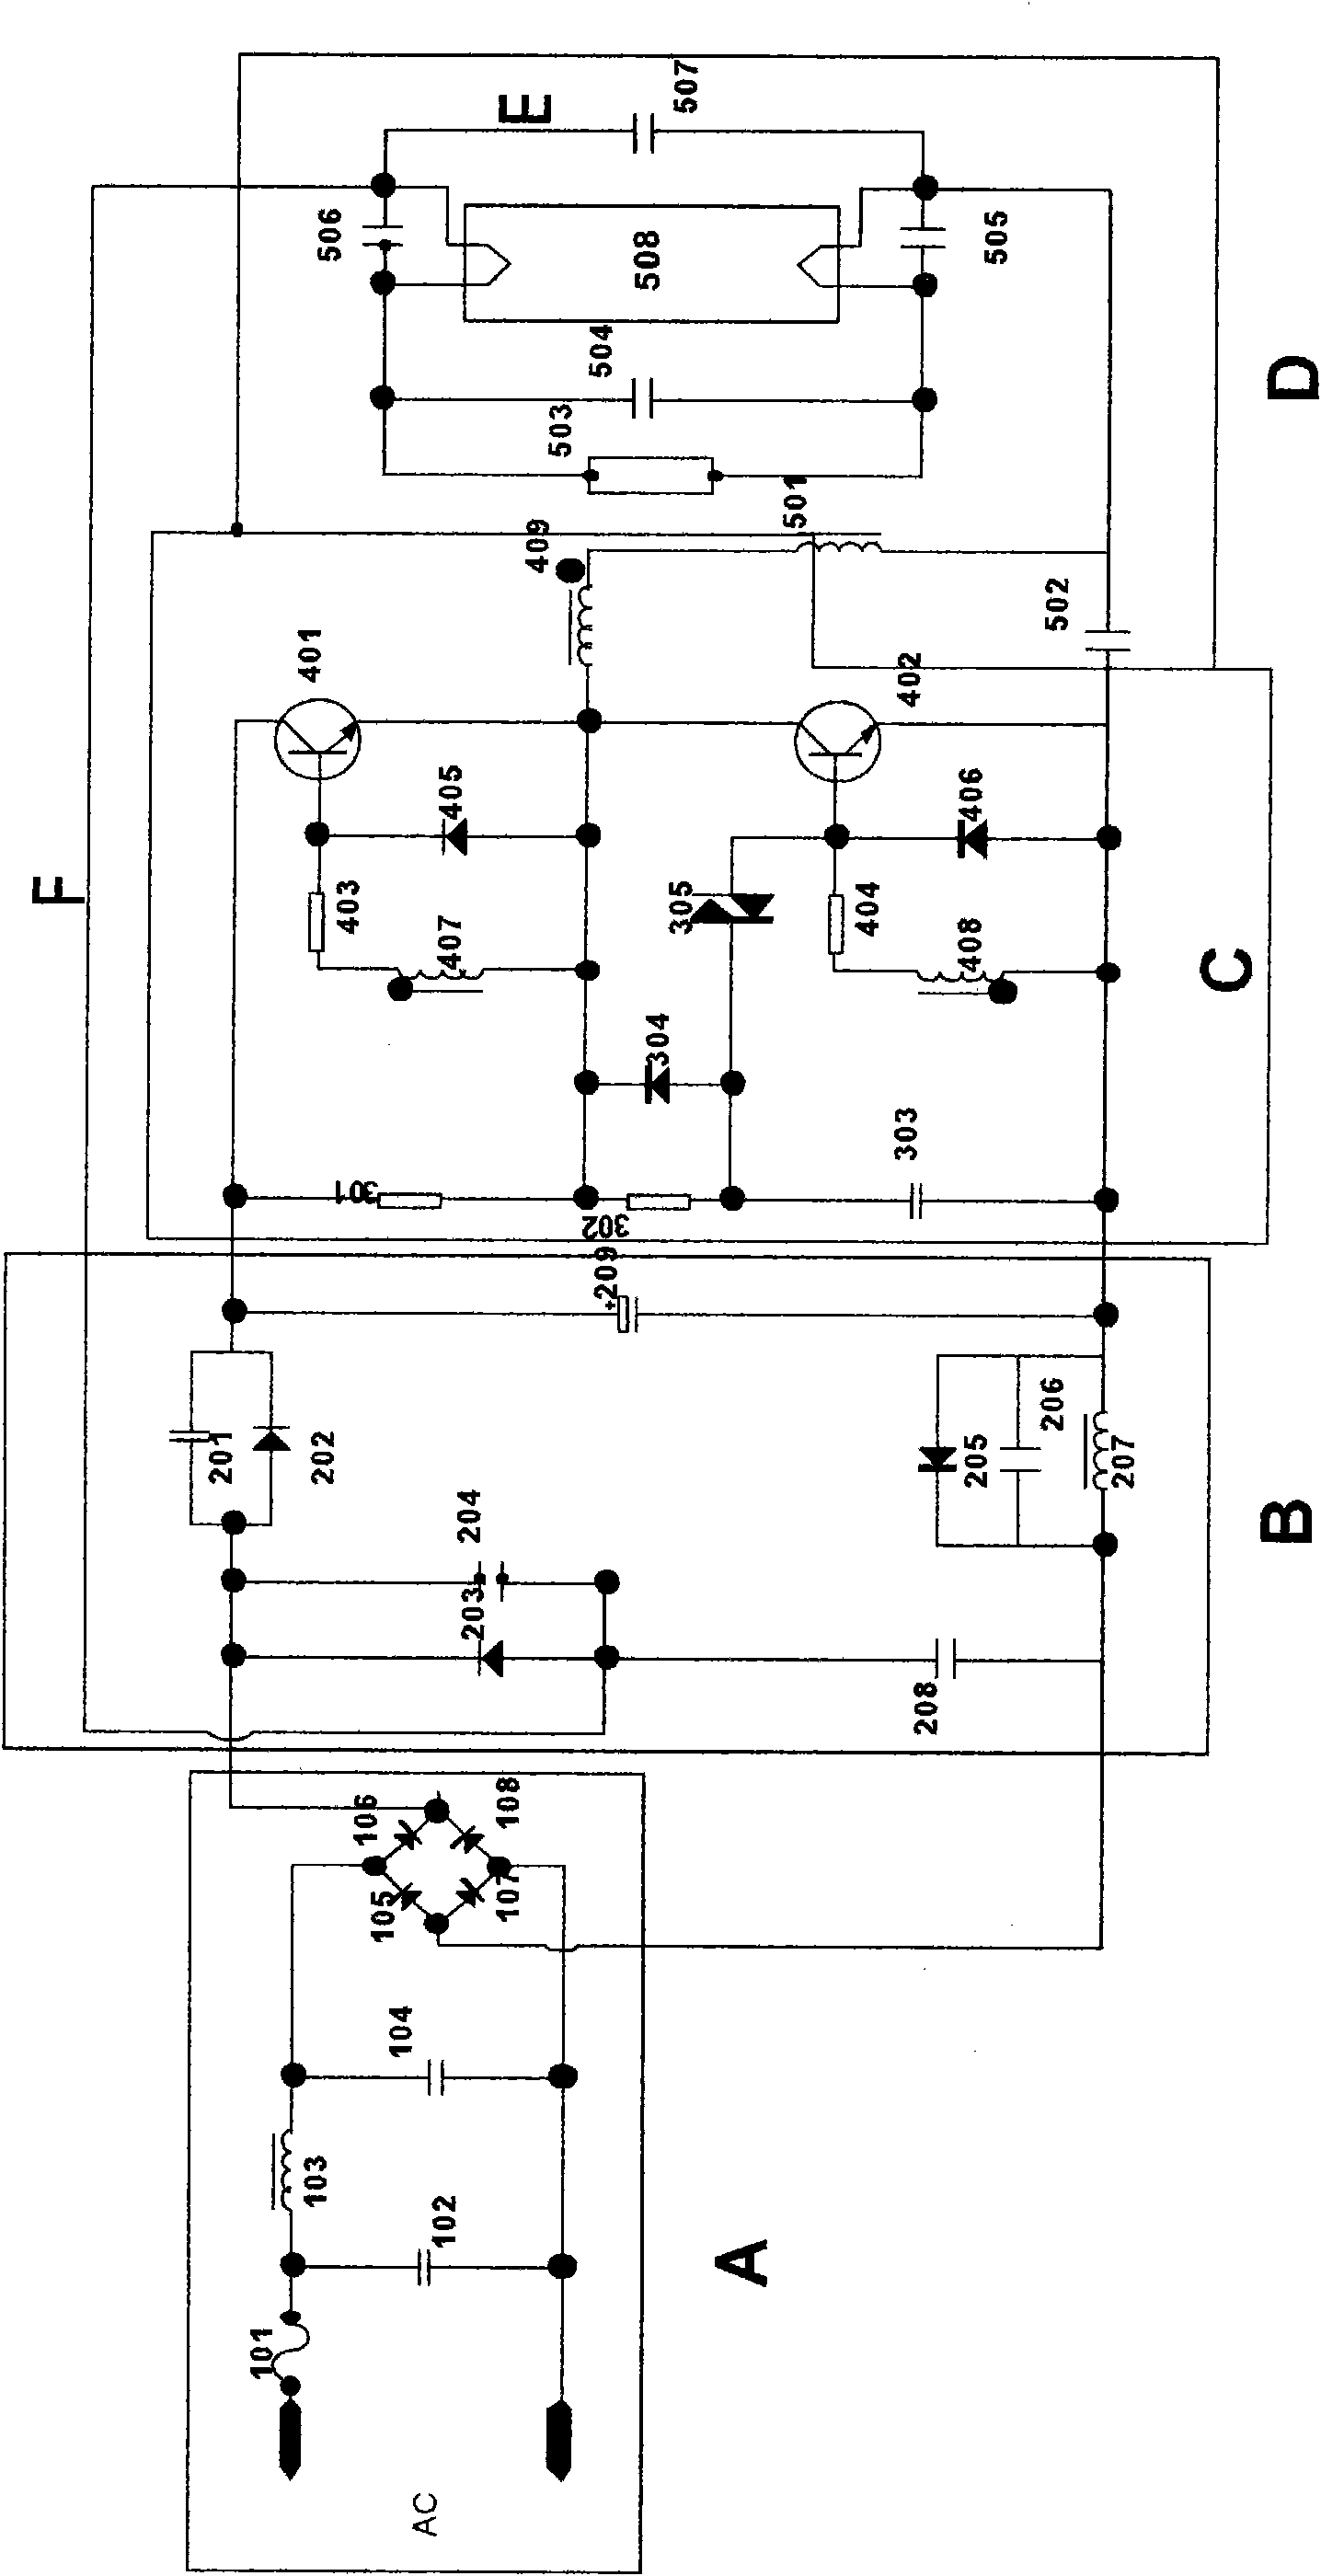 Electronic ballast circuit adaptable to common light adjustor to adjust light